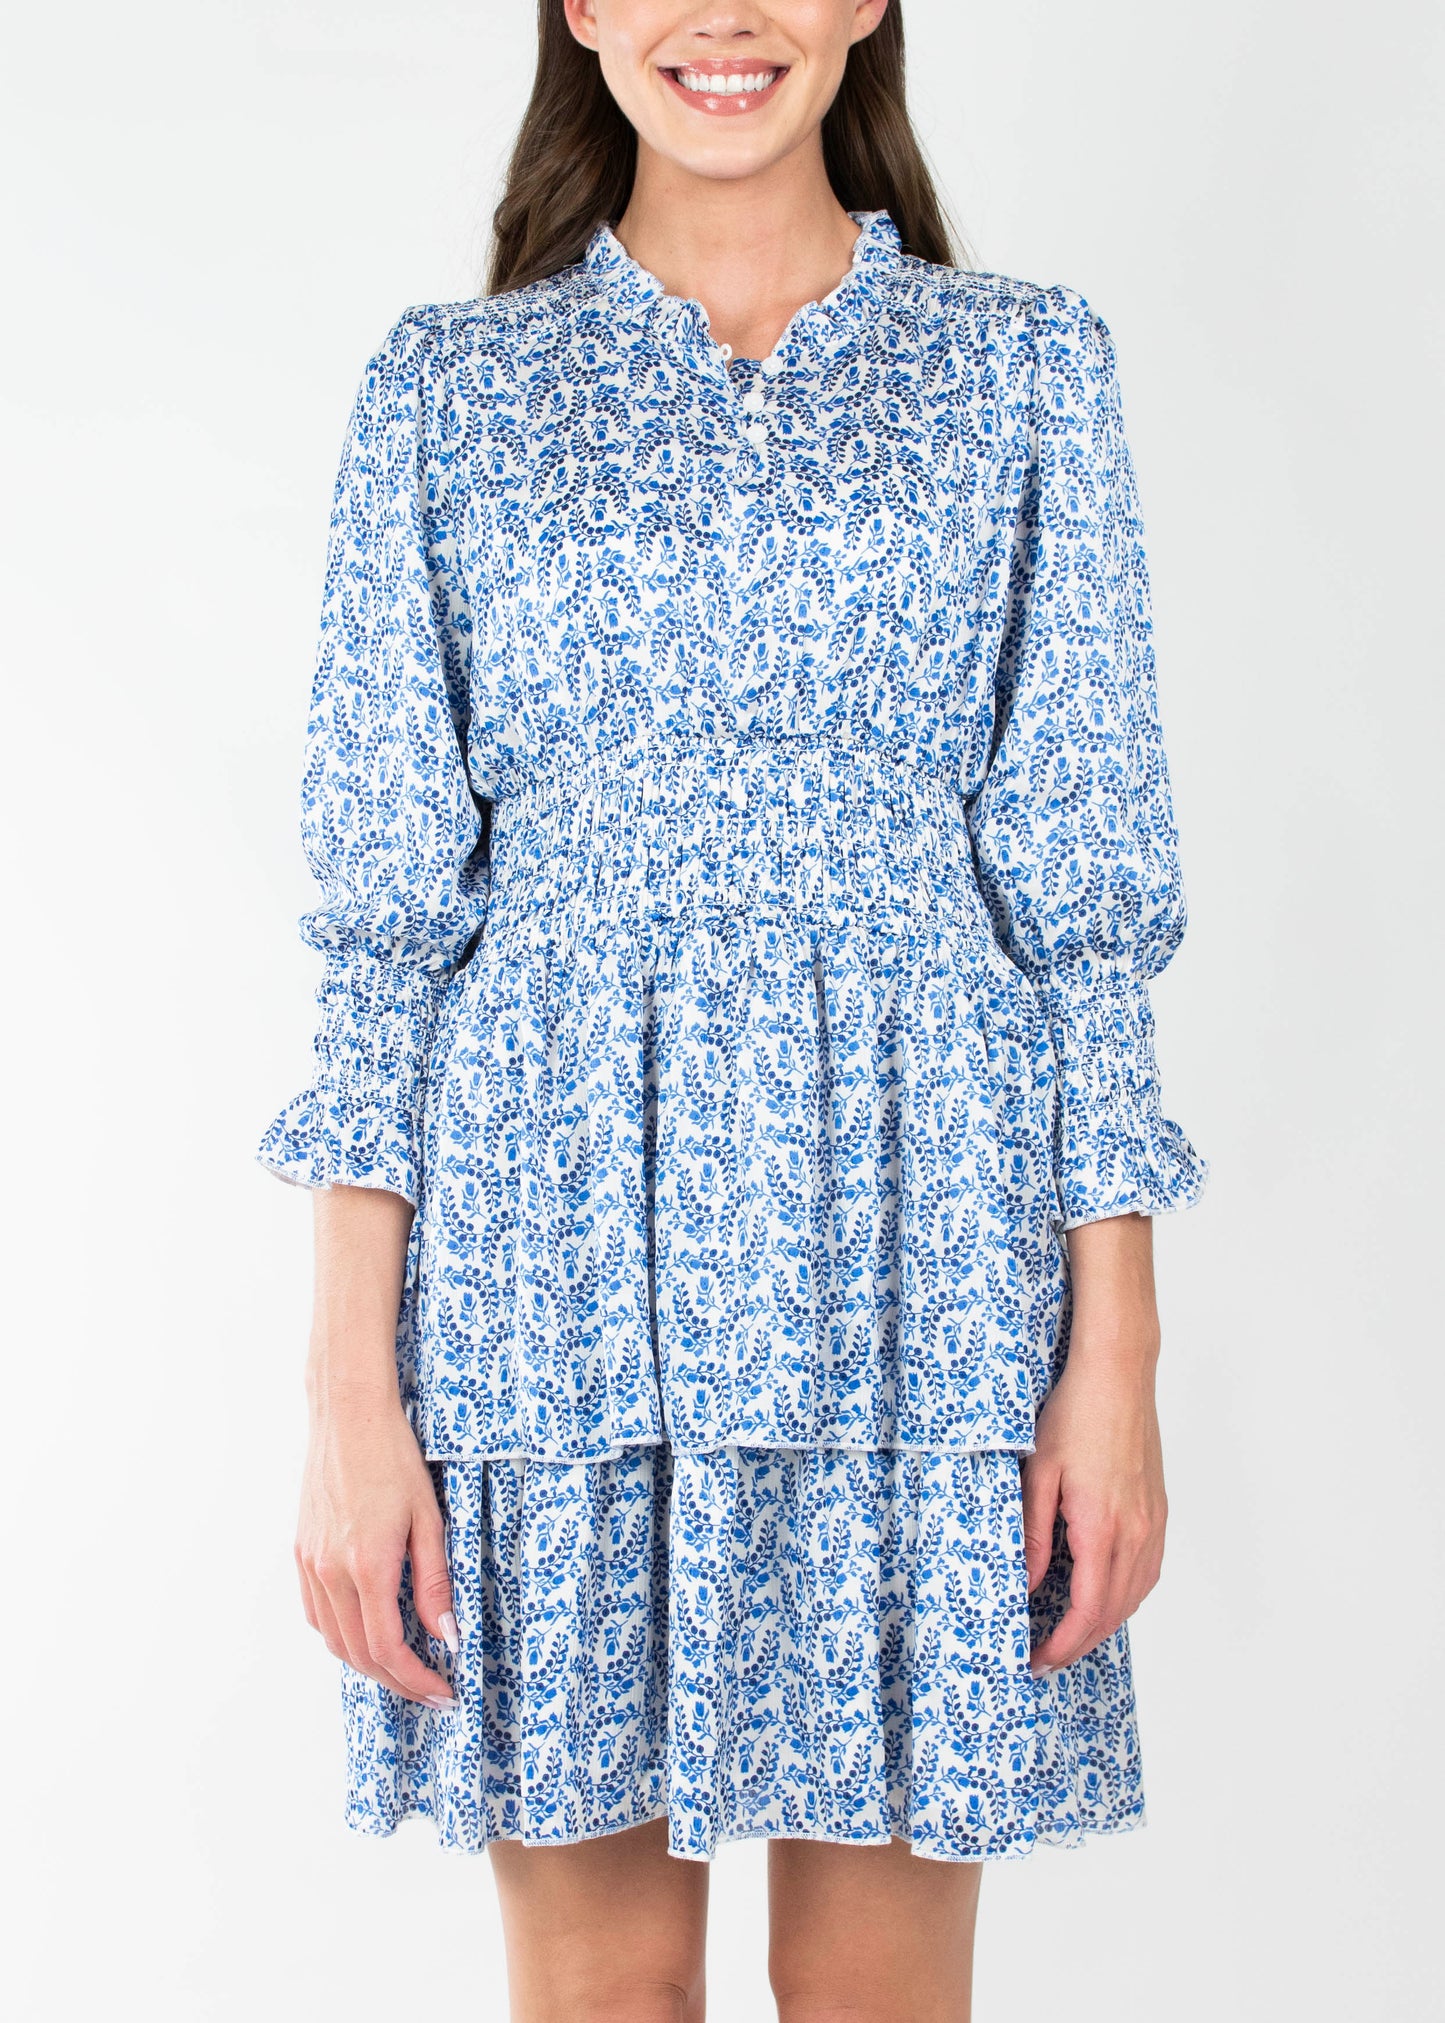 LUNA DRESS (BLUE/WHITE) 36"